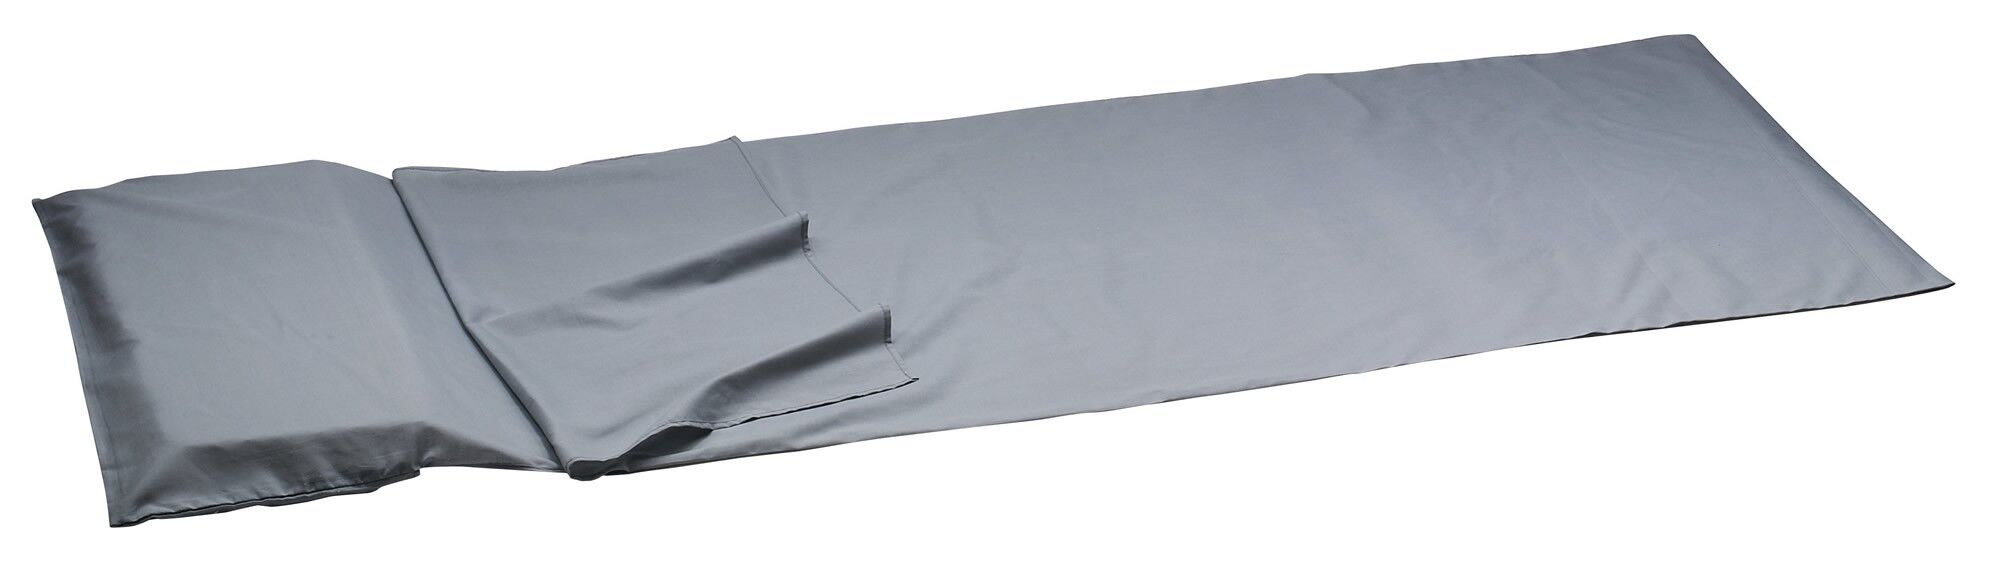 Camp Lining Polycoton - Sleeping bag liner